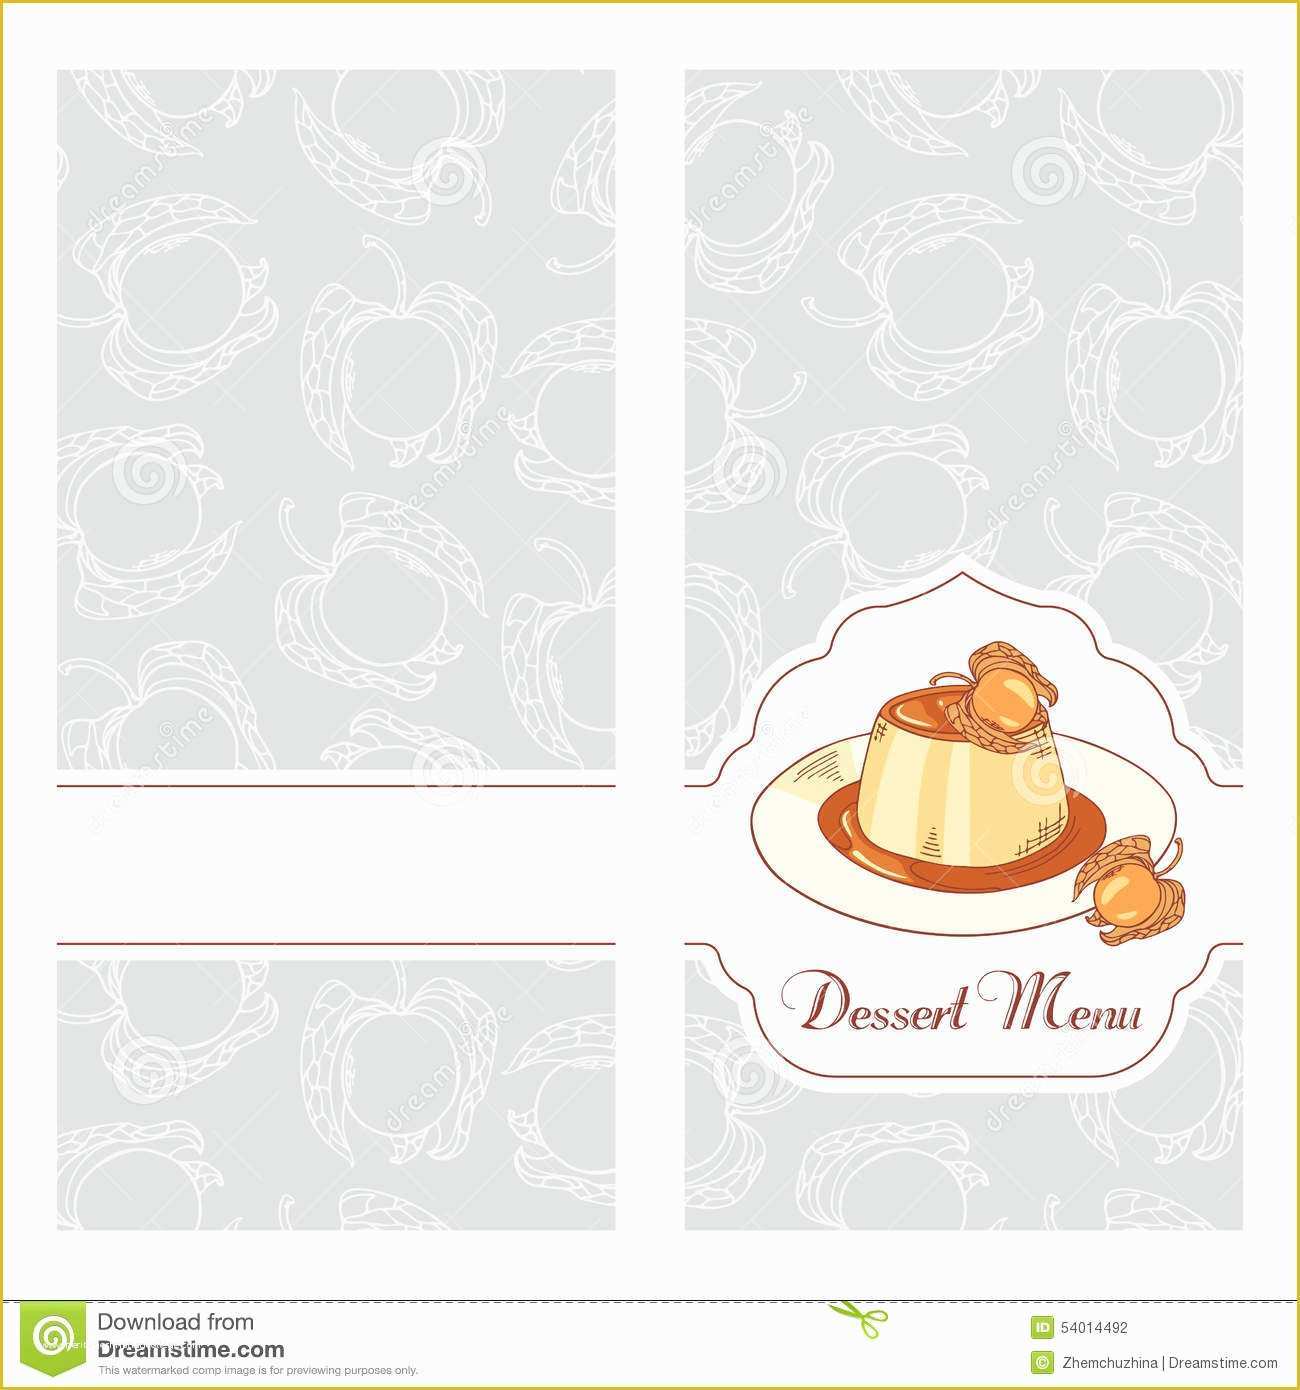 Dessert Menu Template Free Download Of Dessert Menu Template Design for Cafe Creme Caramel